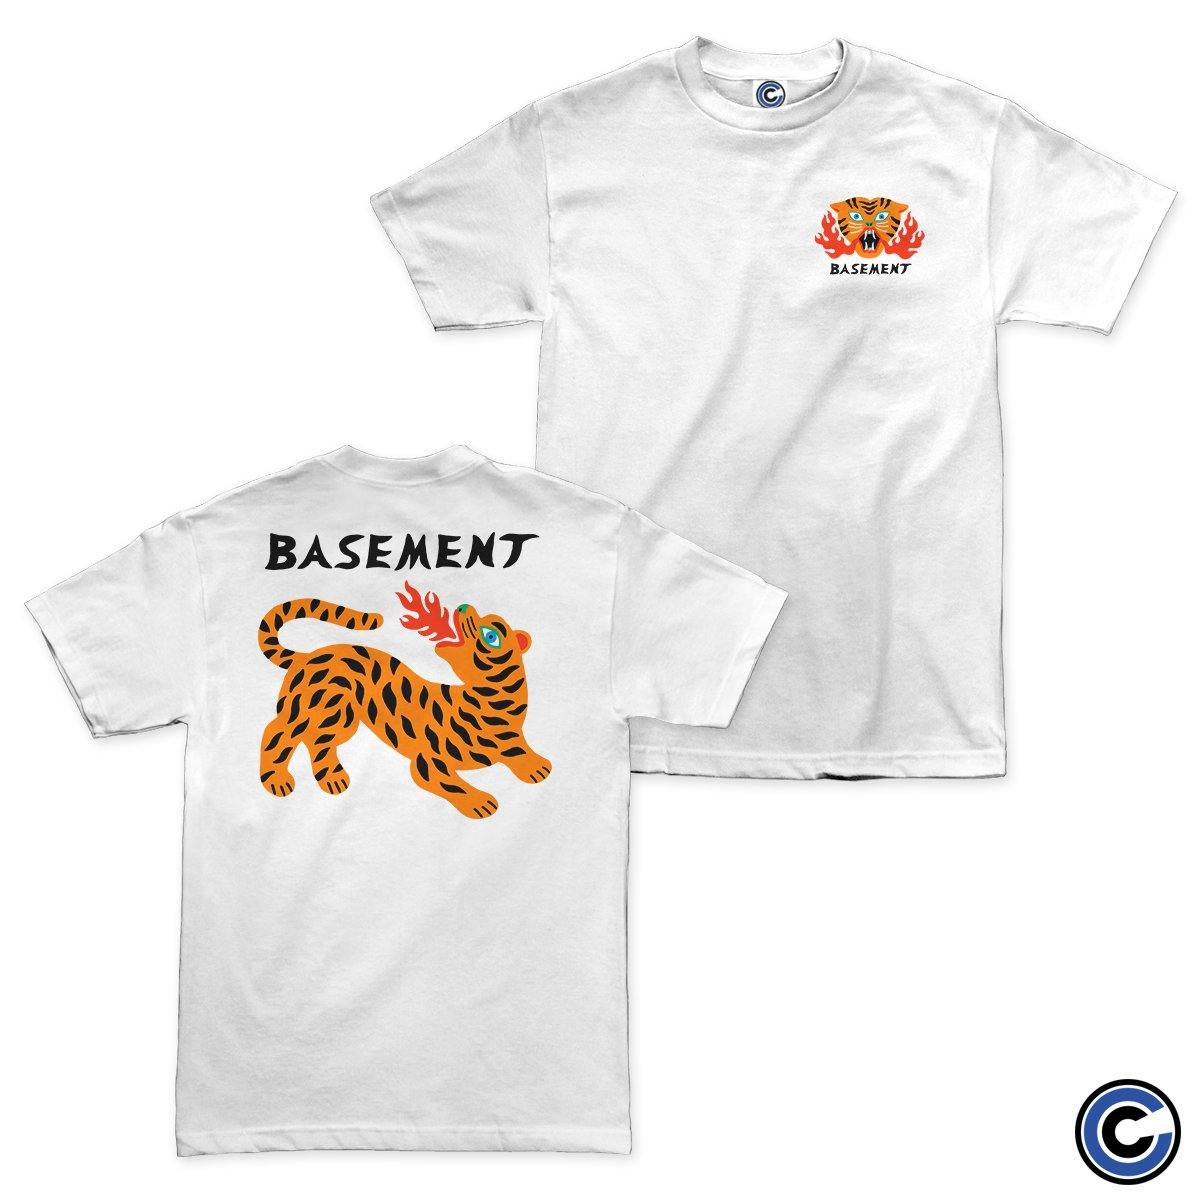 Buy – Basement "Burning Tiger" Shirt – Band & Music Merch – Cold Cuts Merch